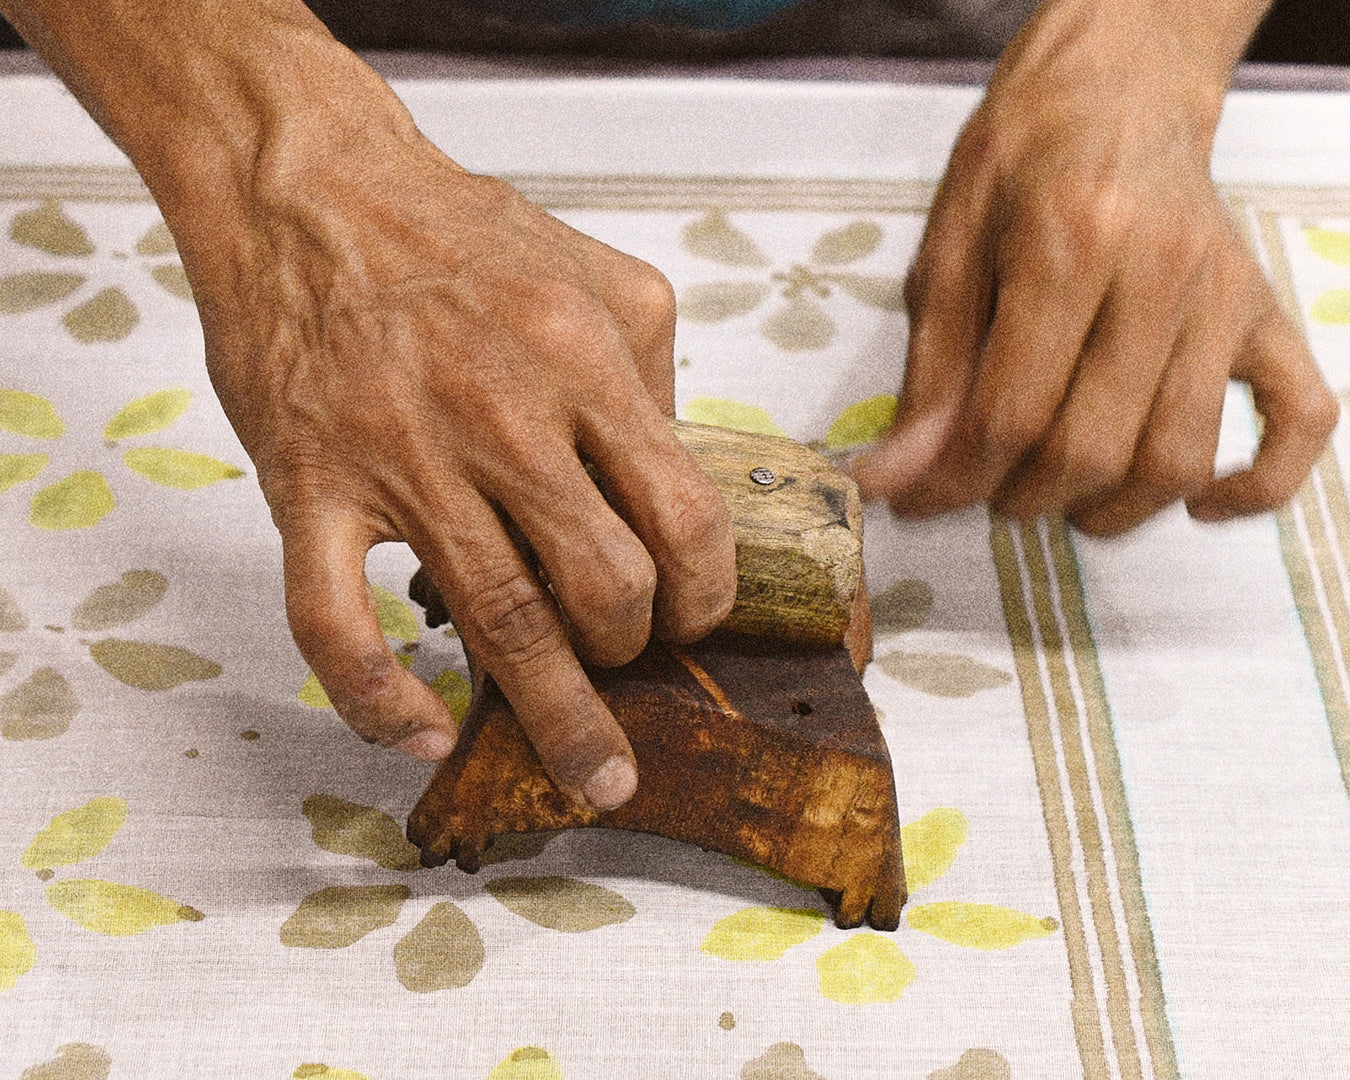 Artist wood block printing flowers onto cotton fabric